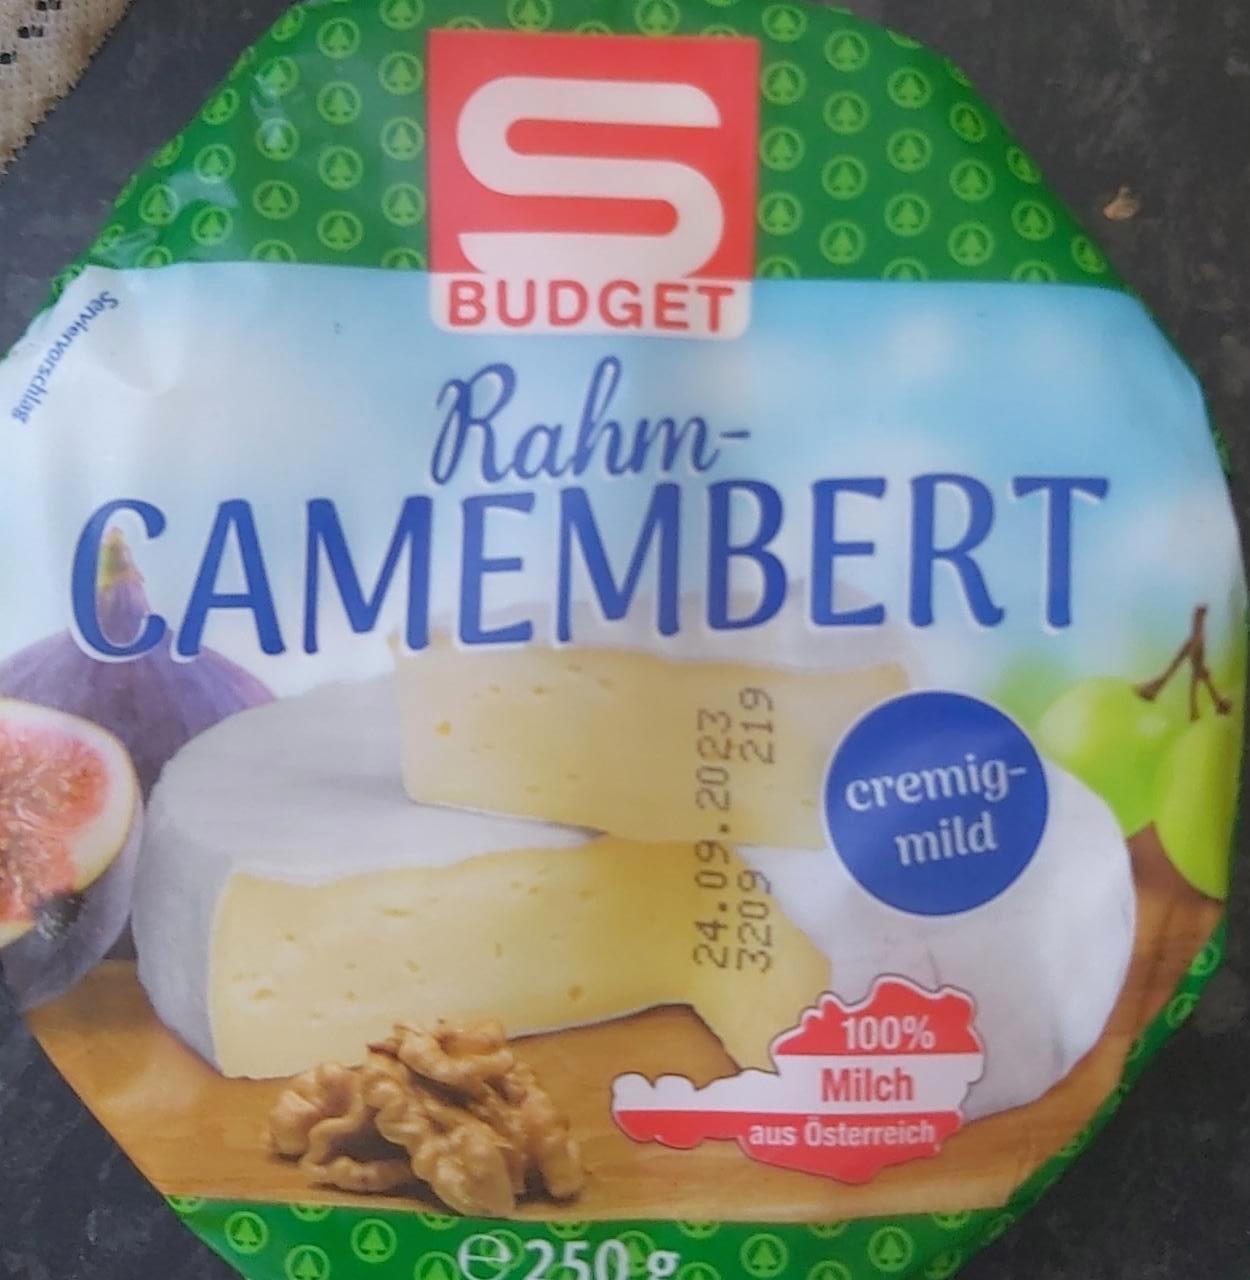 Képek - Camembert Creamy mild S Budget